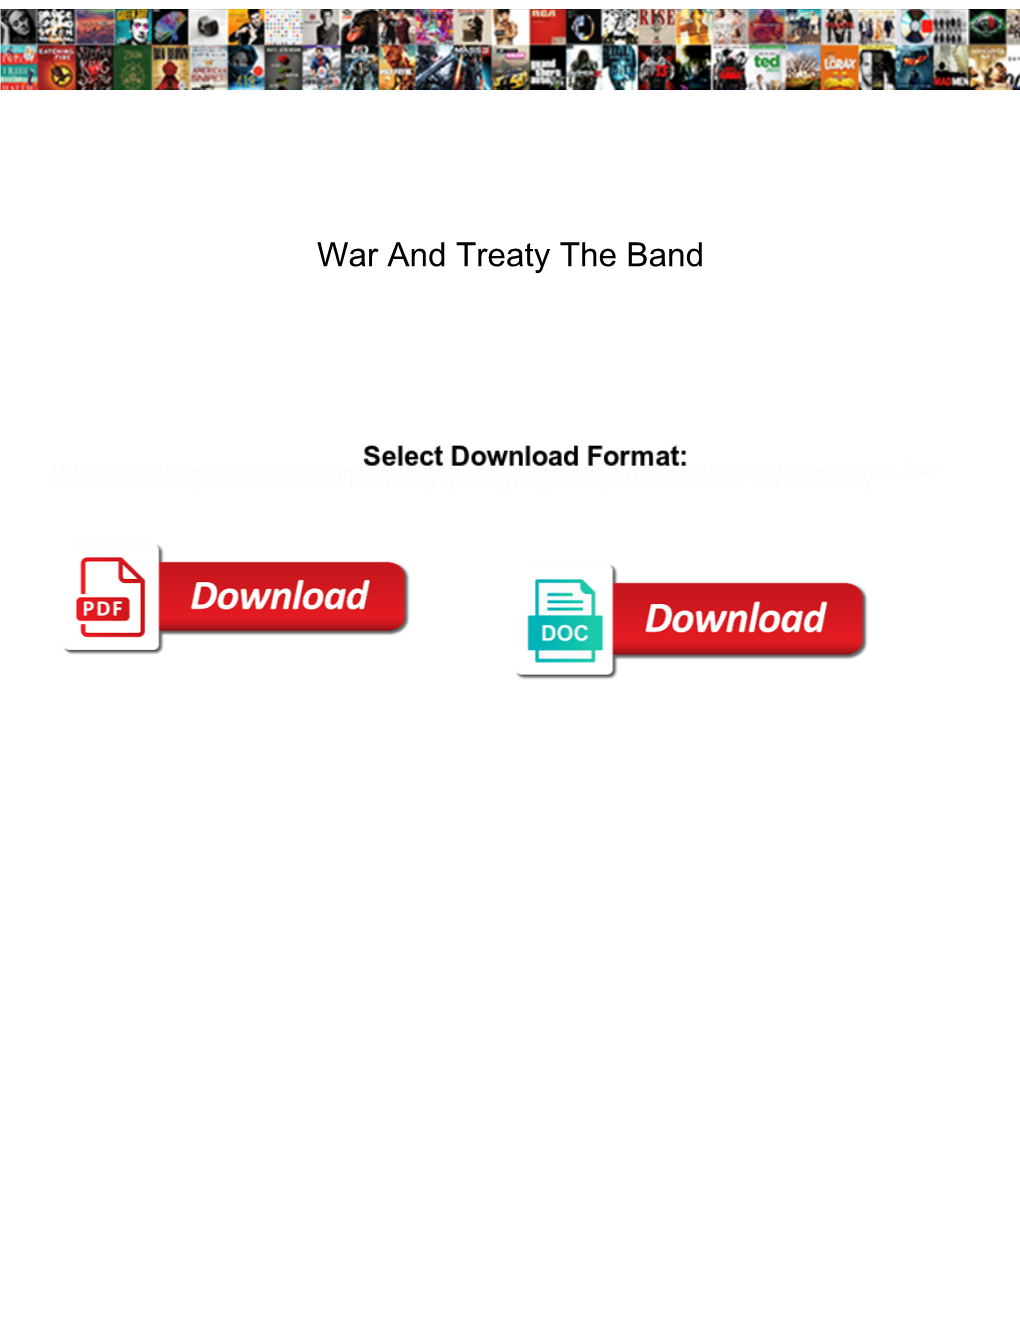 War and Treaty the Band